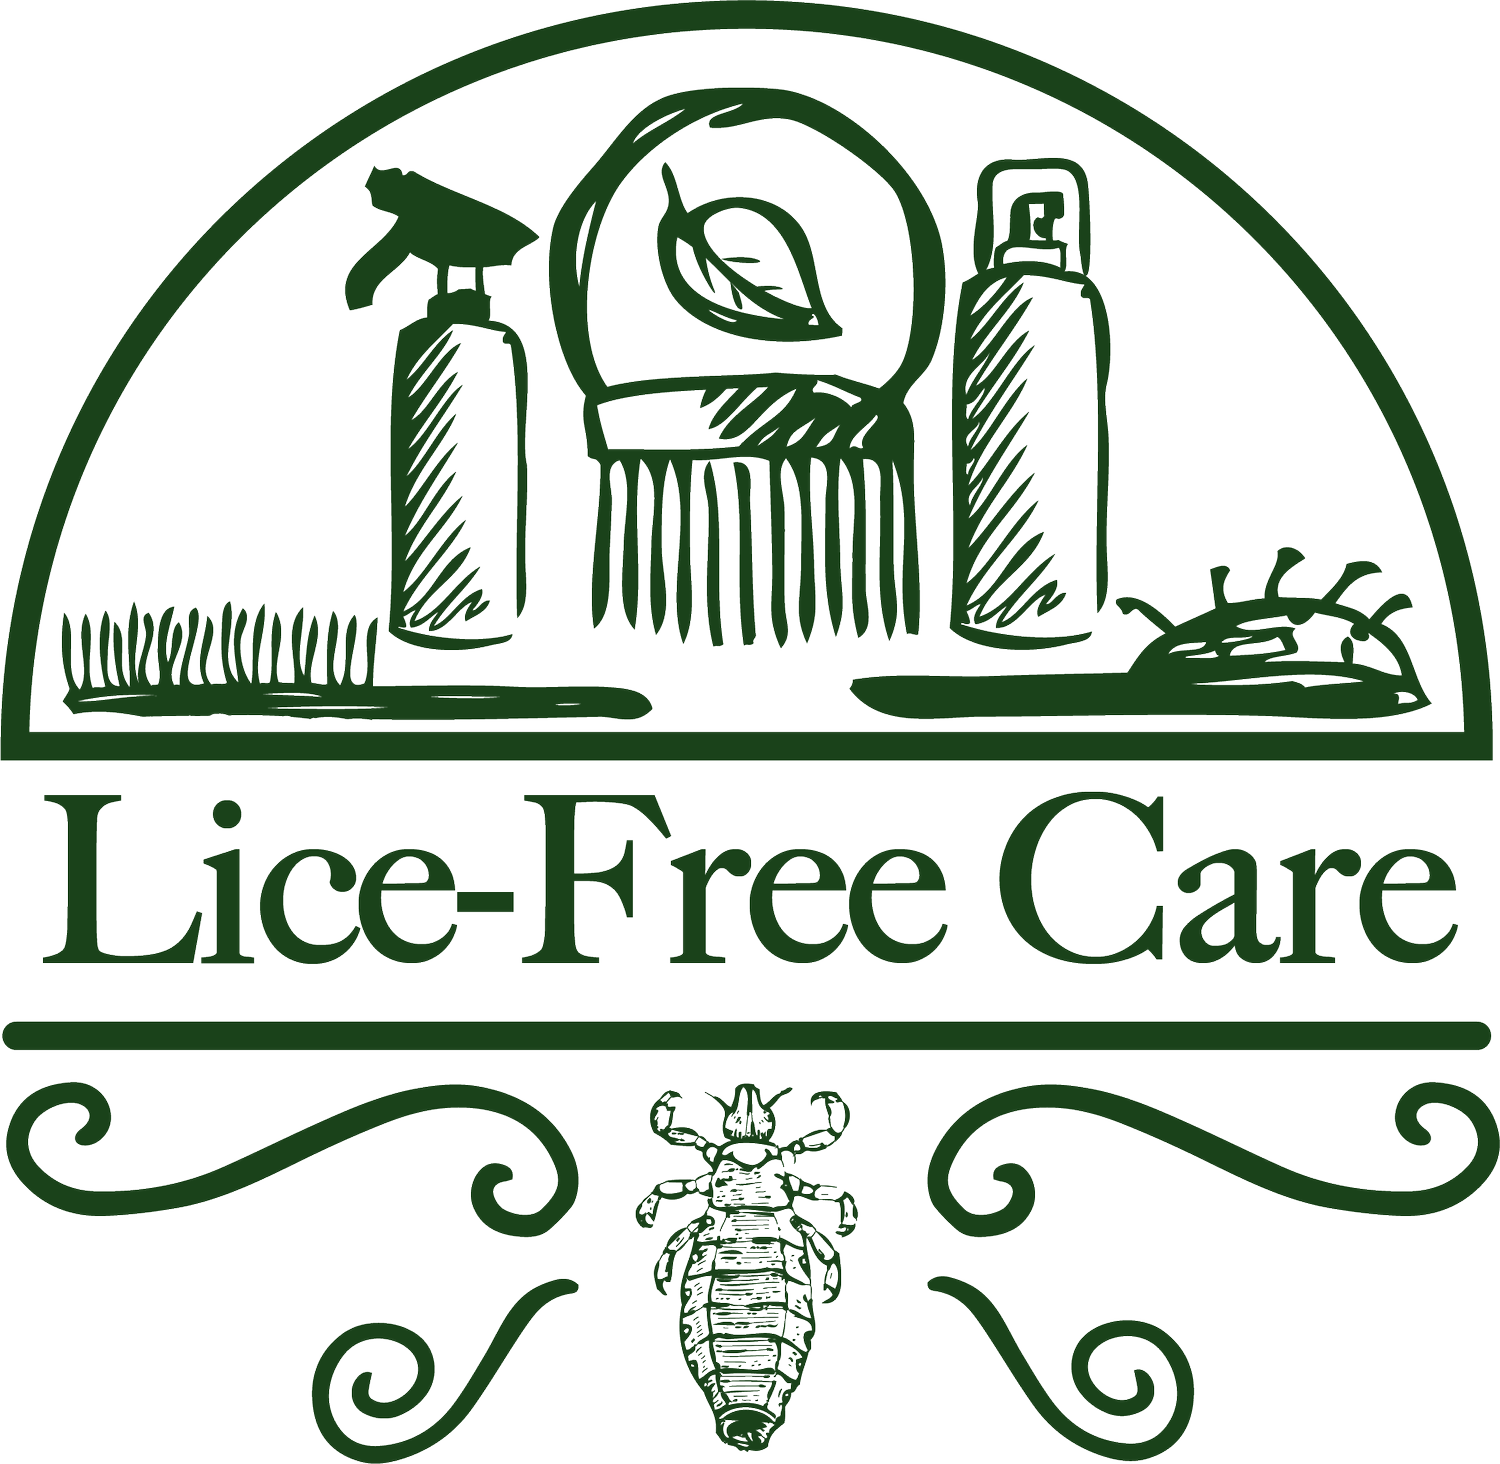 Lice-Free Care